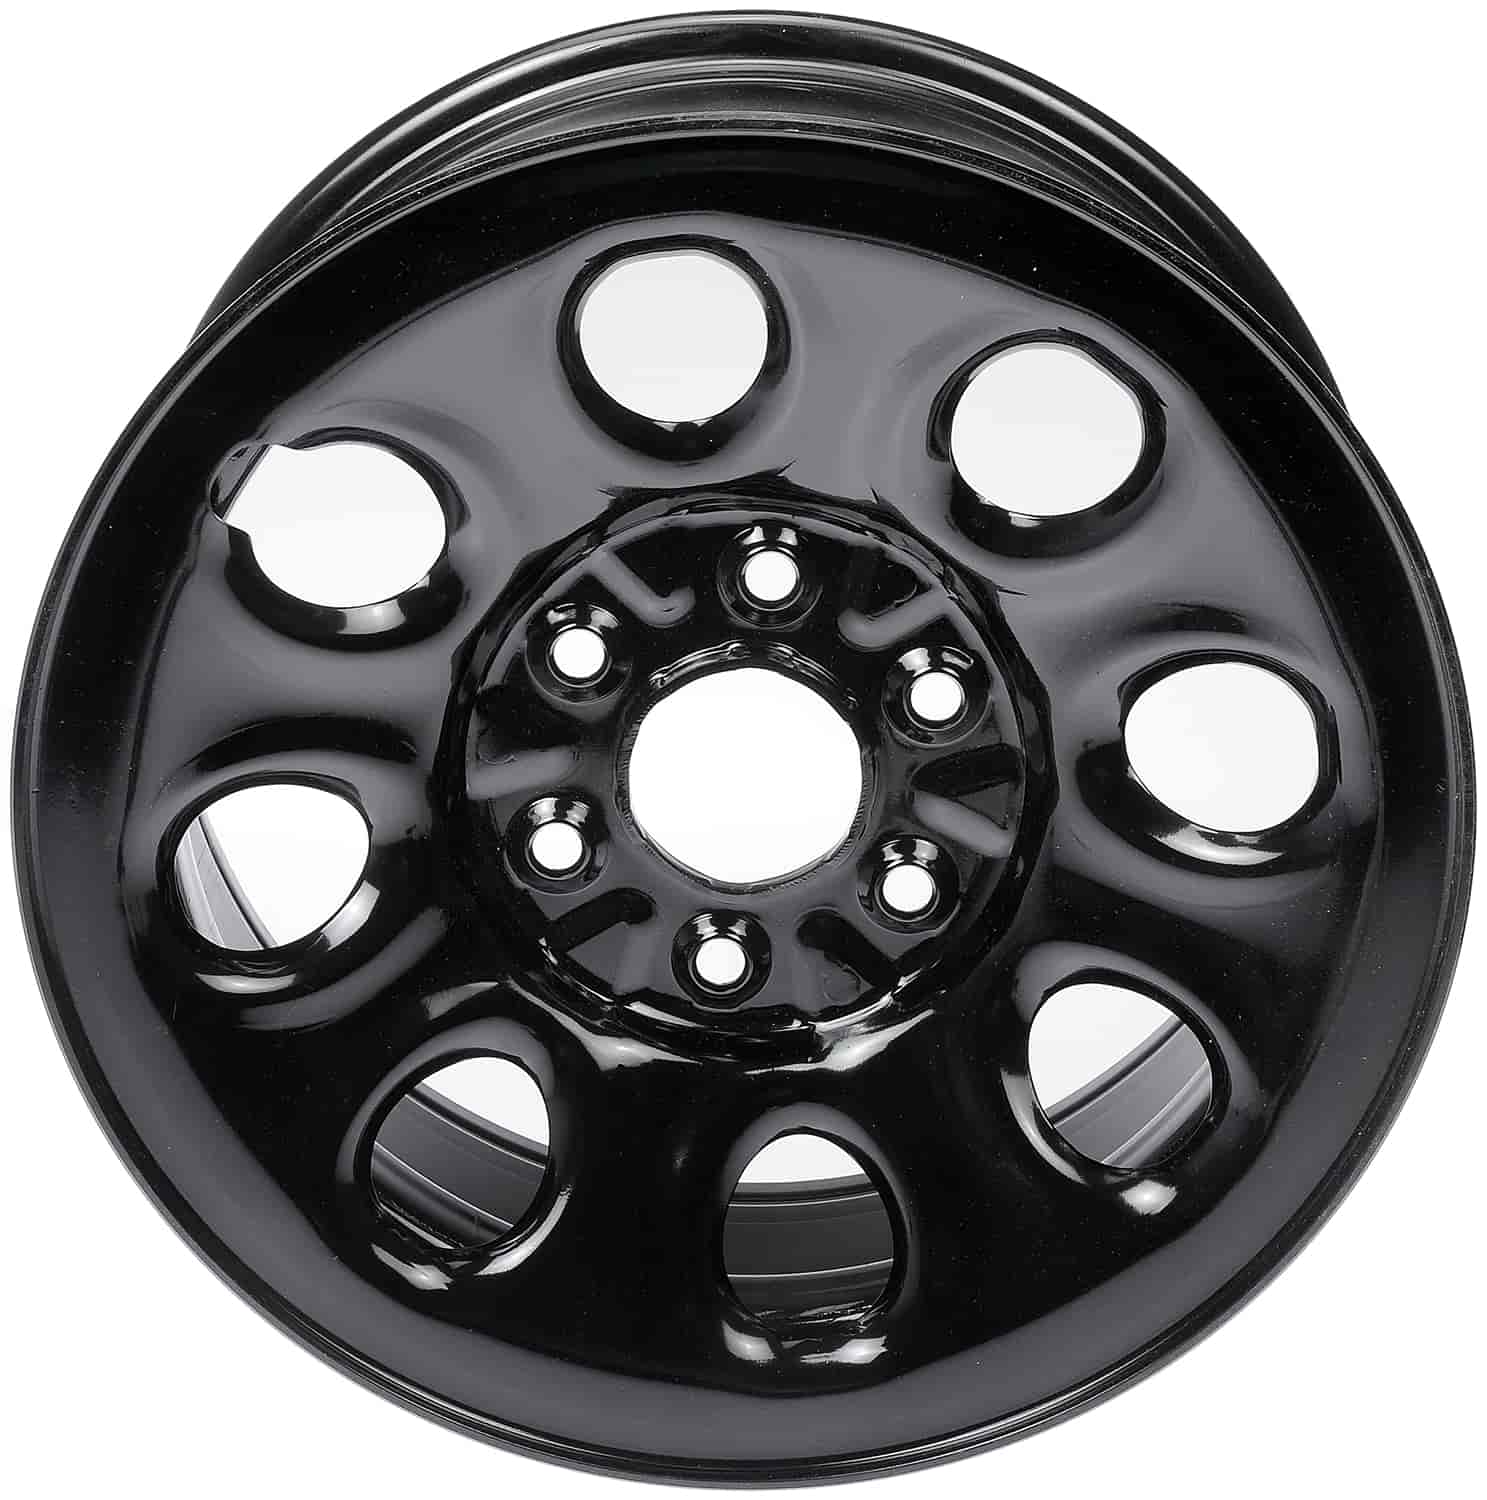 Steel Wheel for 2007-2014 Cadillac, Chevrolet, GMC RWD Truck/SUV [Size: 17" x 7.50"] Black